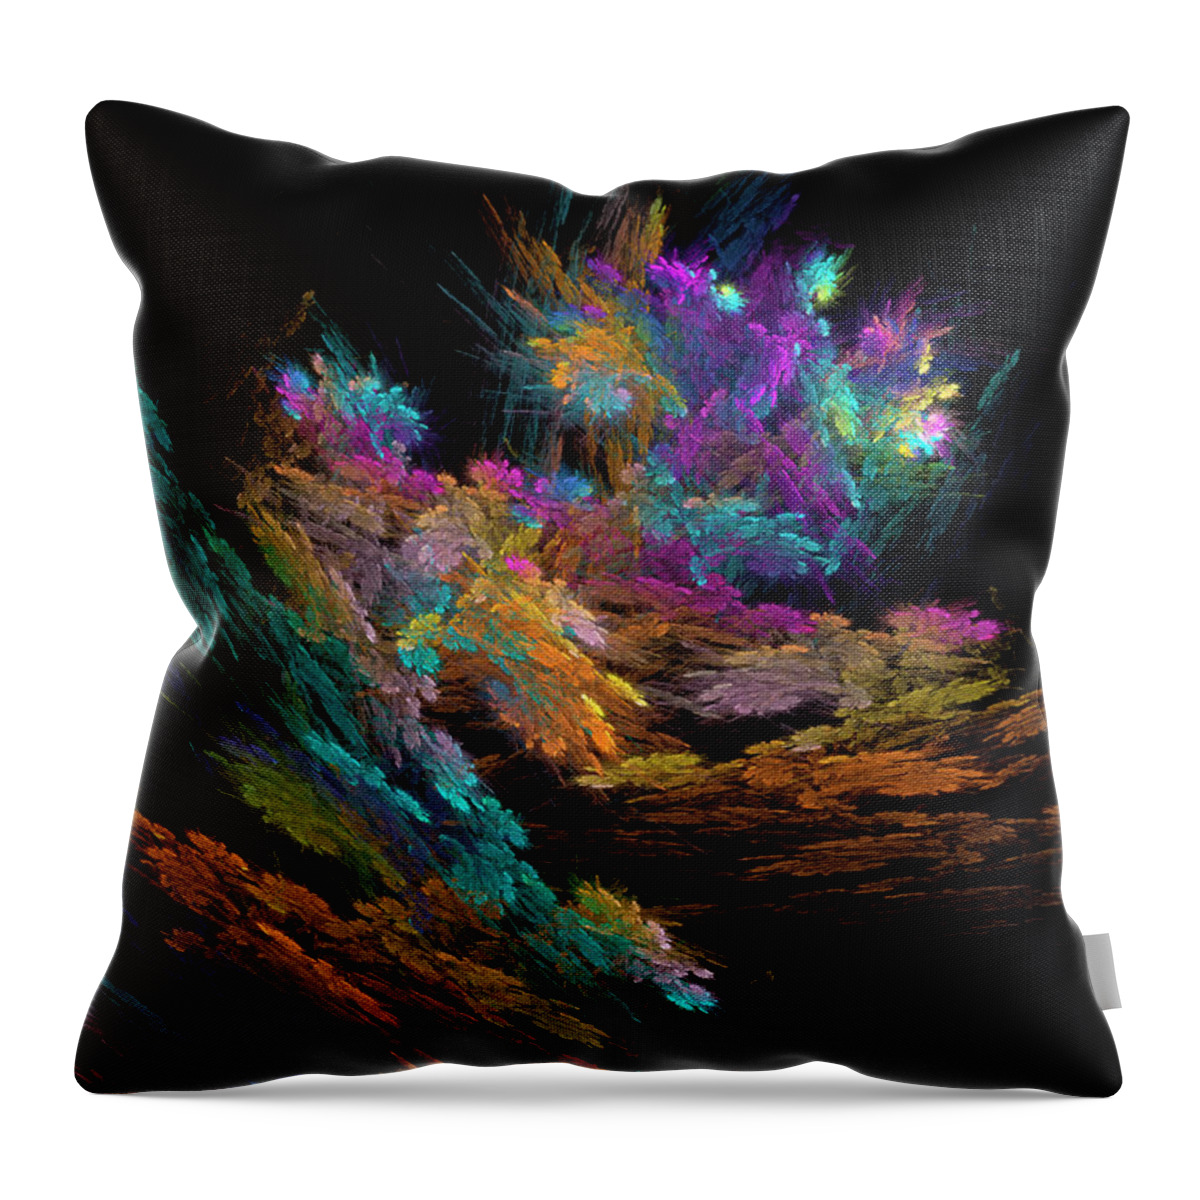 Garden Throw Pillow featuring the digital art Cliff Garden by Ilia -